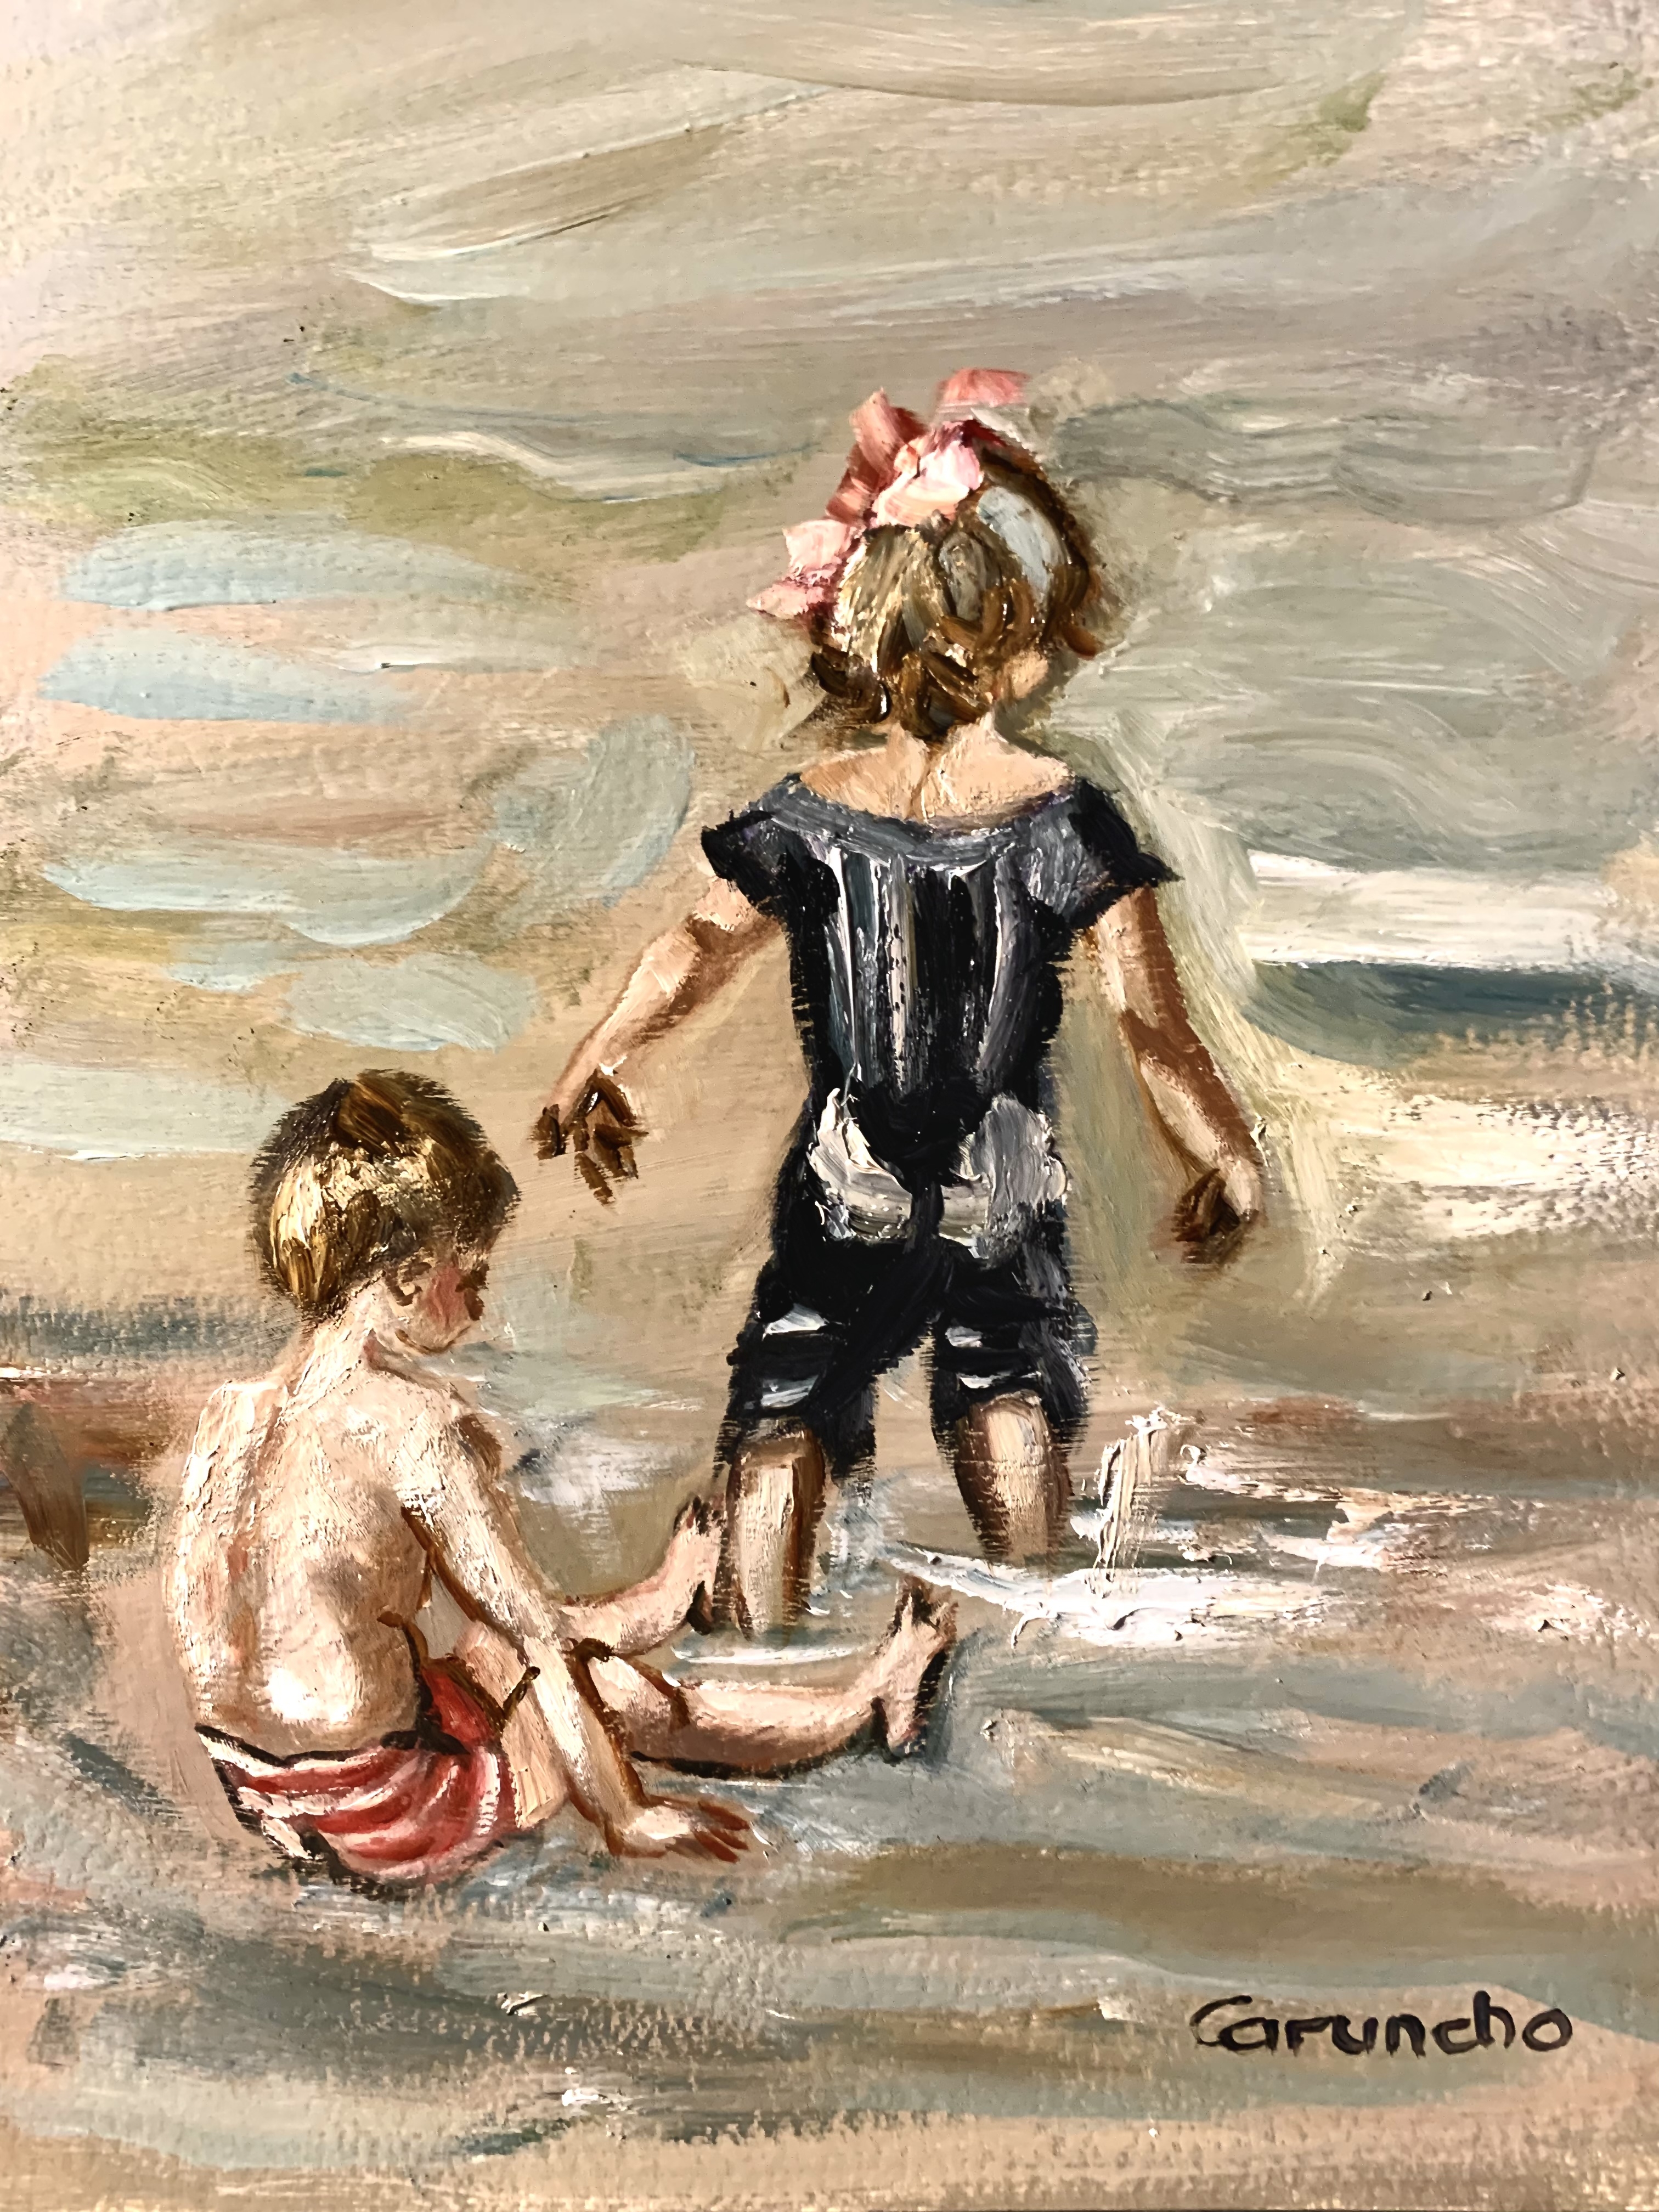 Two children in the sea